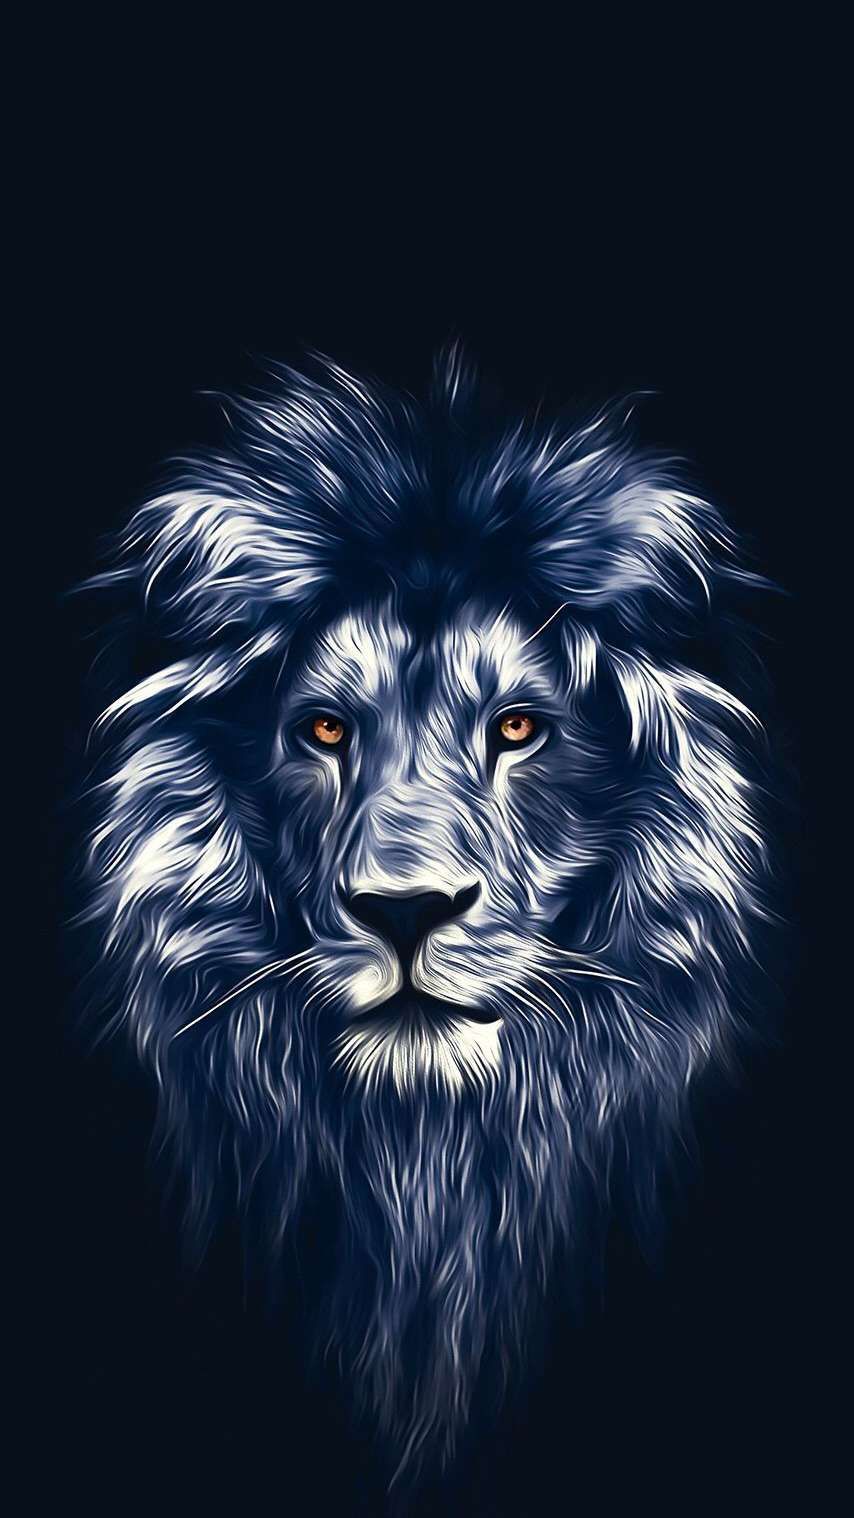 Lion Art iPhone Wallpaper Free Lion Art iPhone Background